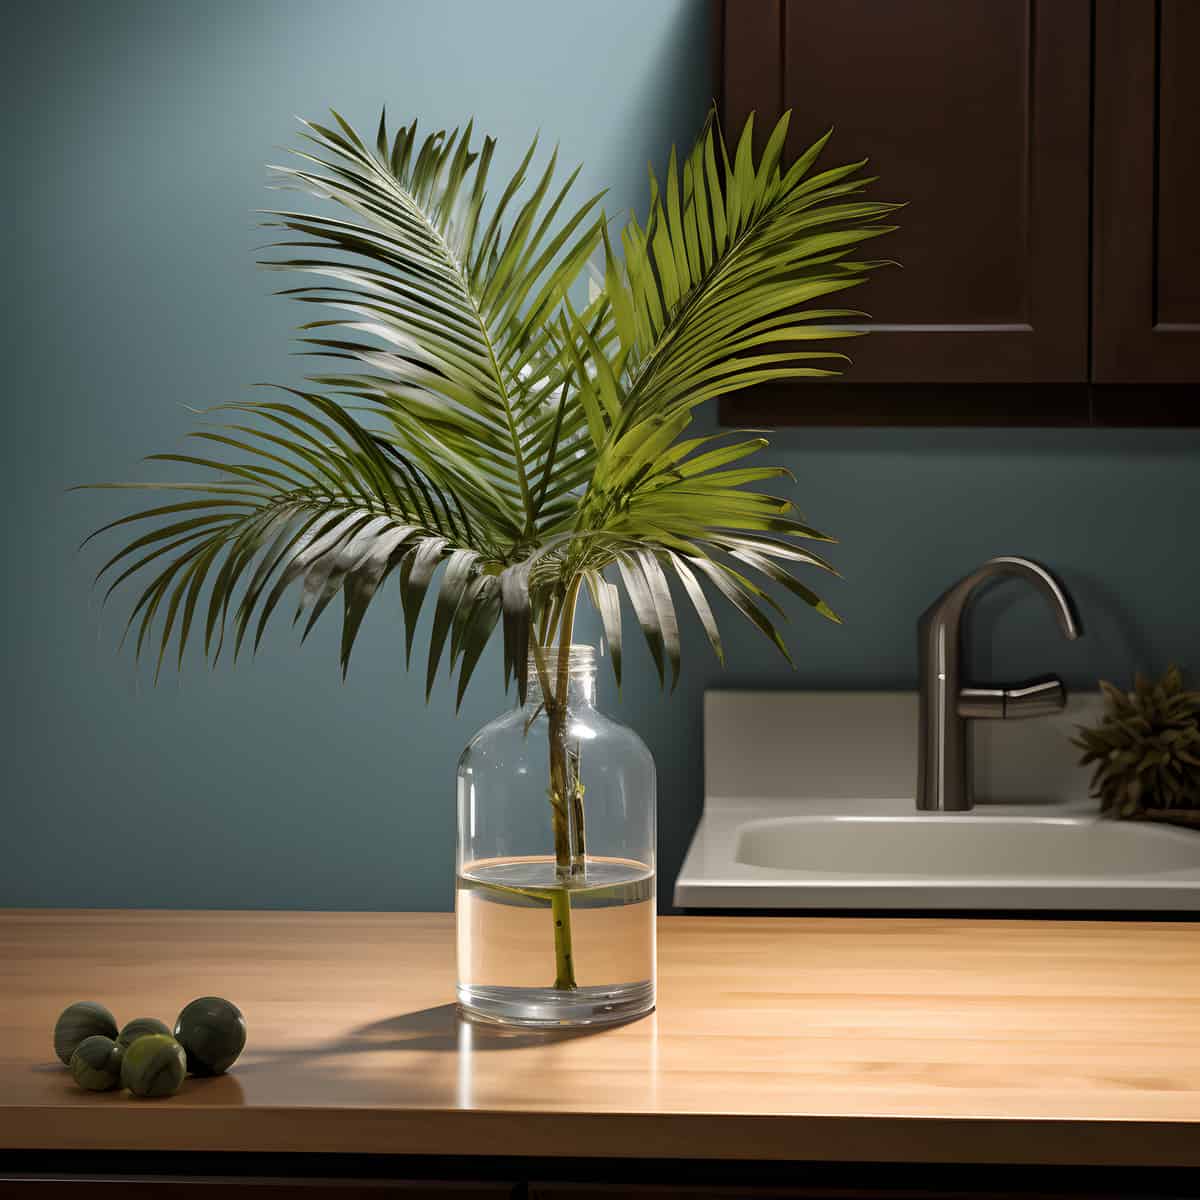 Viagra Palm on a kitchen counter